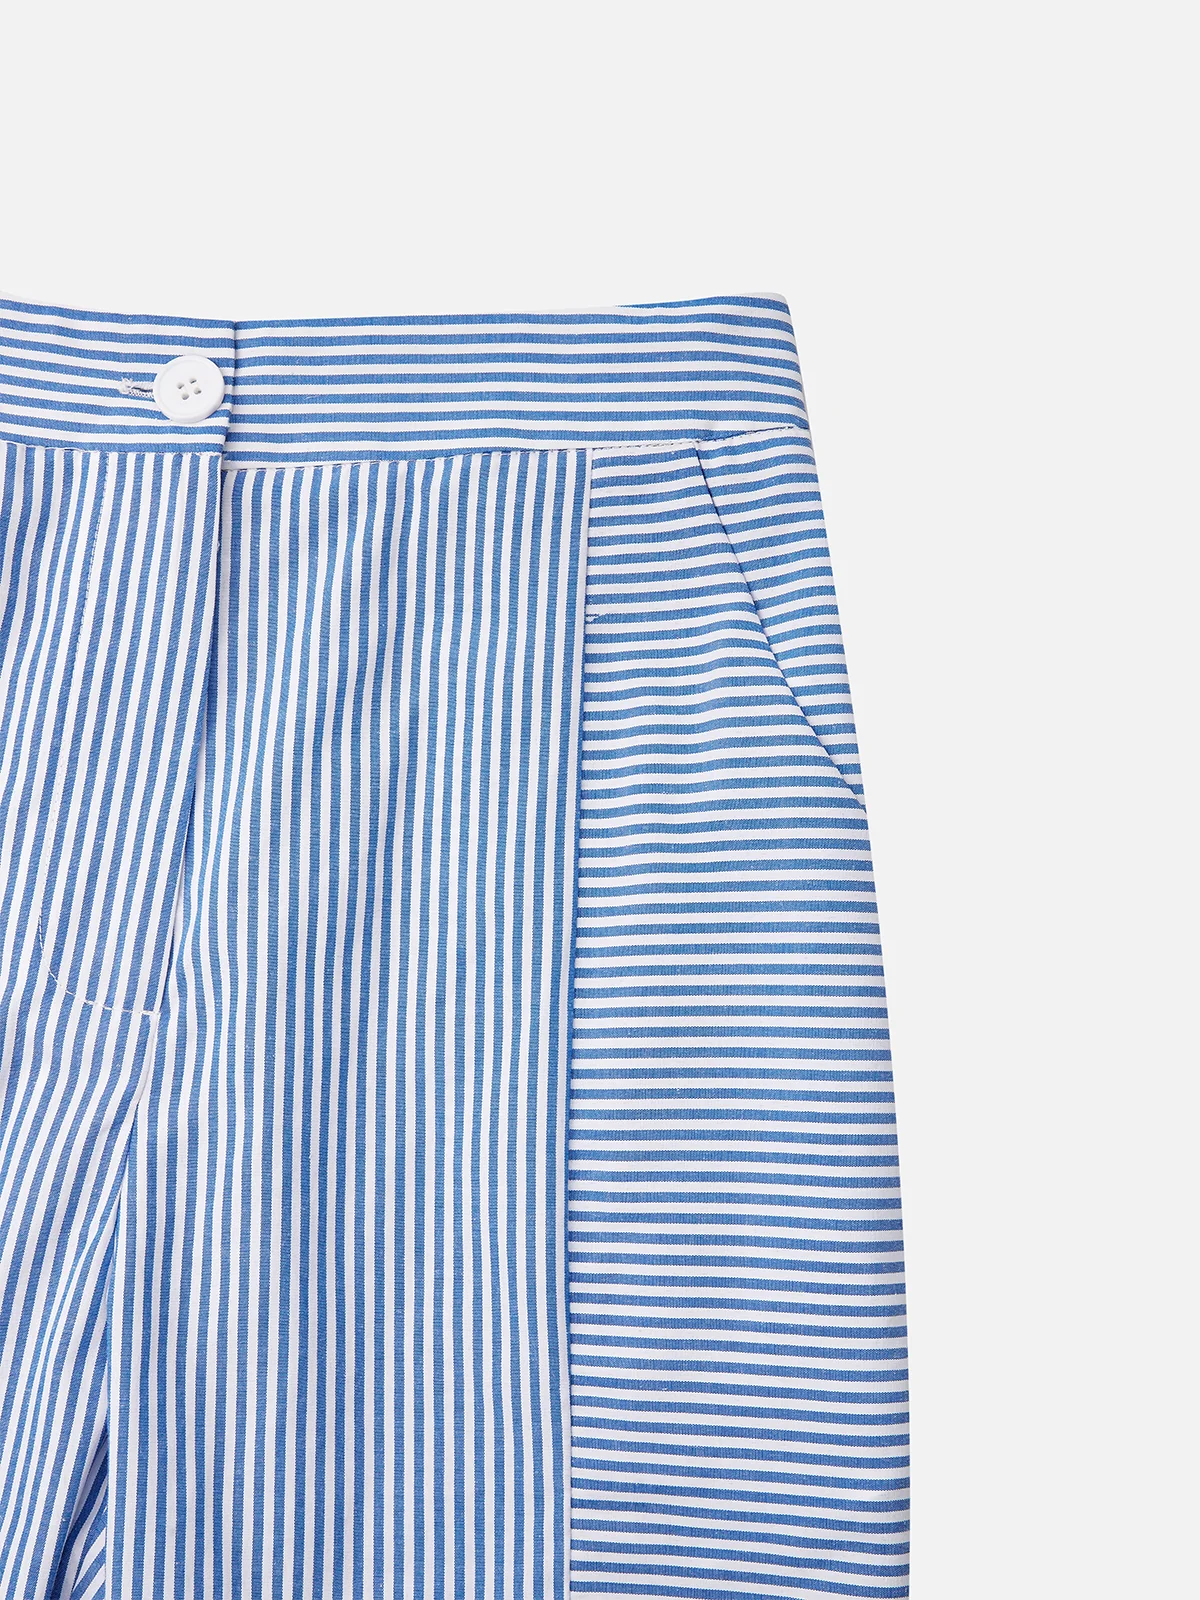 JFN Casual Cotton-blend Striped Pants